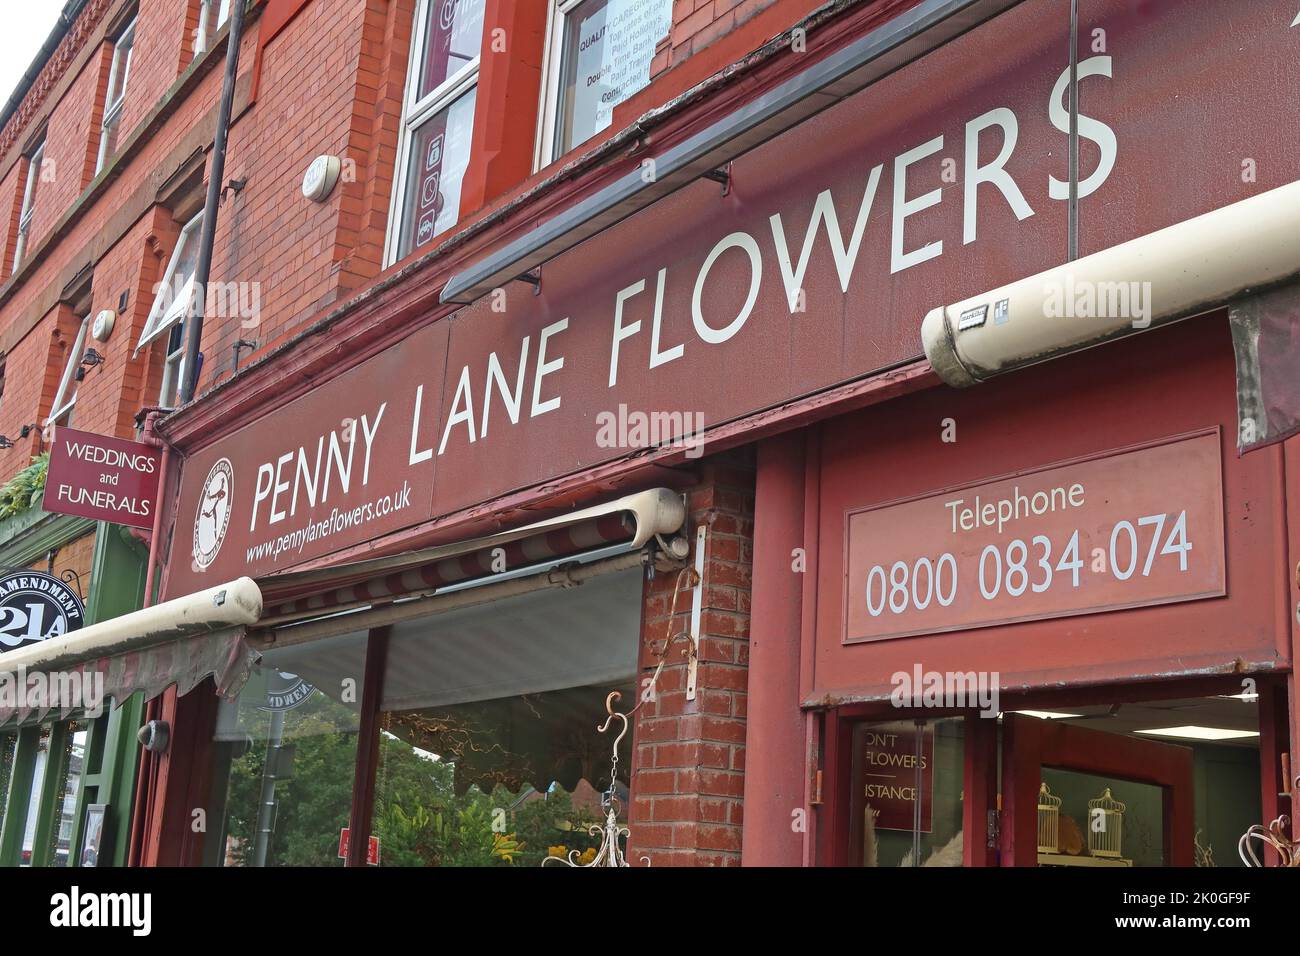 The flower shop, Penny Lane Flowers, 7 Church Rd, Liverpool, Merseyside, England, UK, L15 9EA Stock Photo